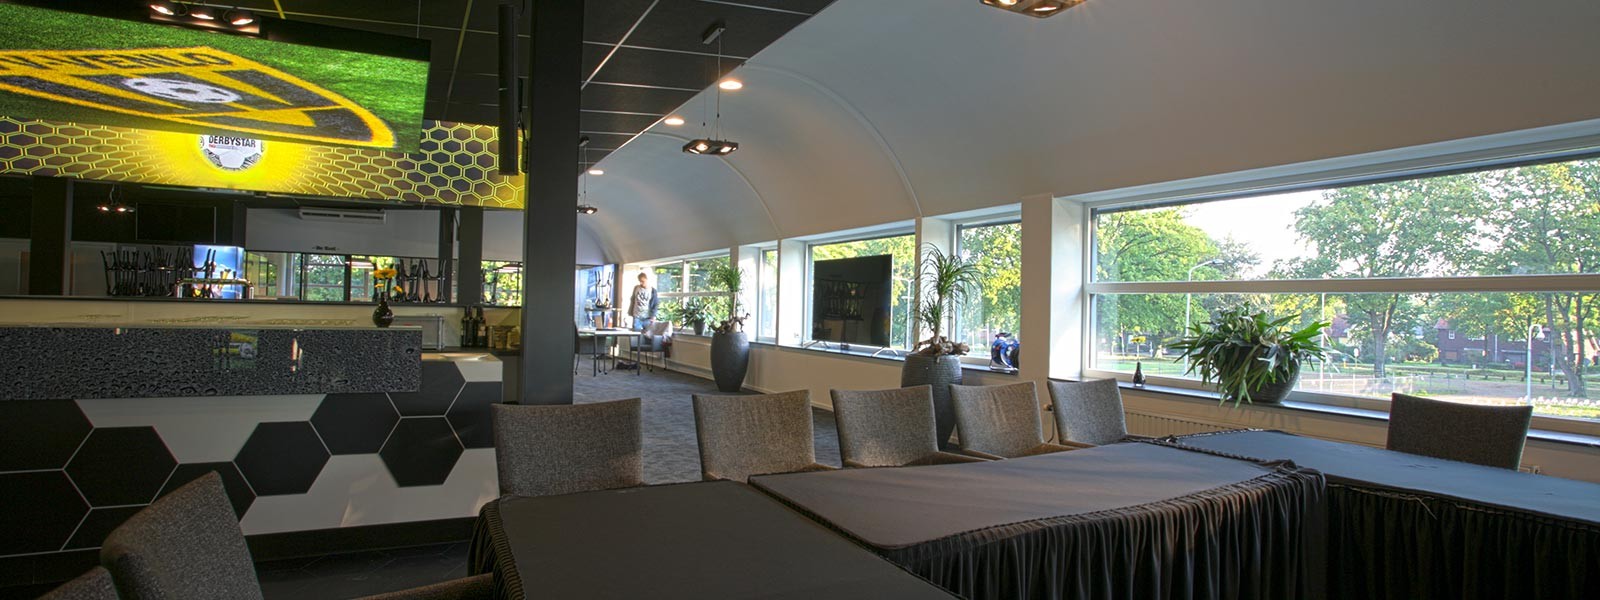 VVV-Venlo Business lounge, Venlo